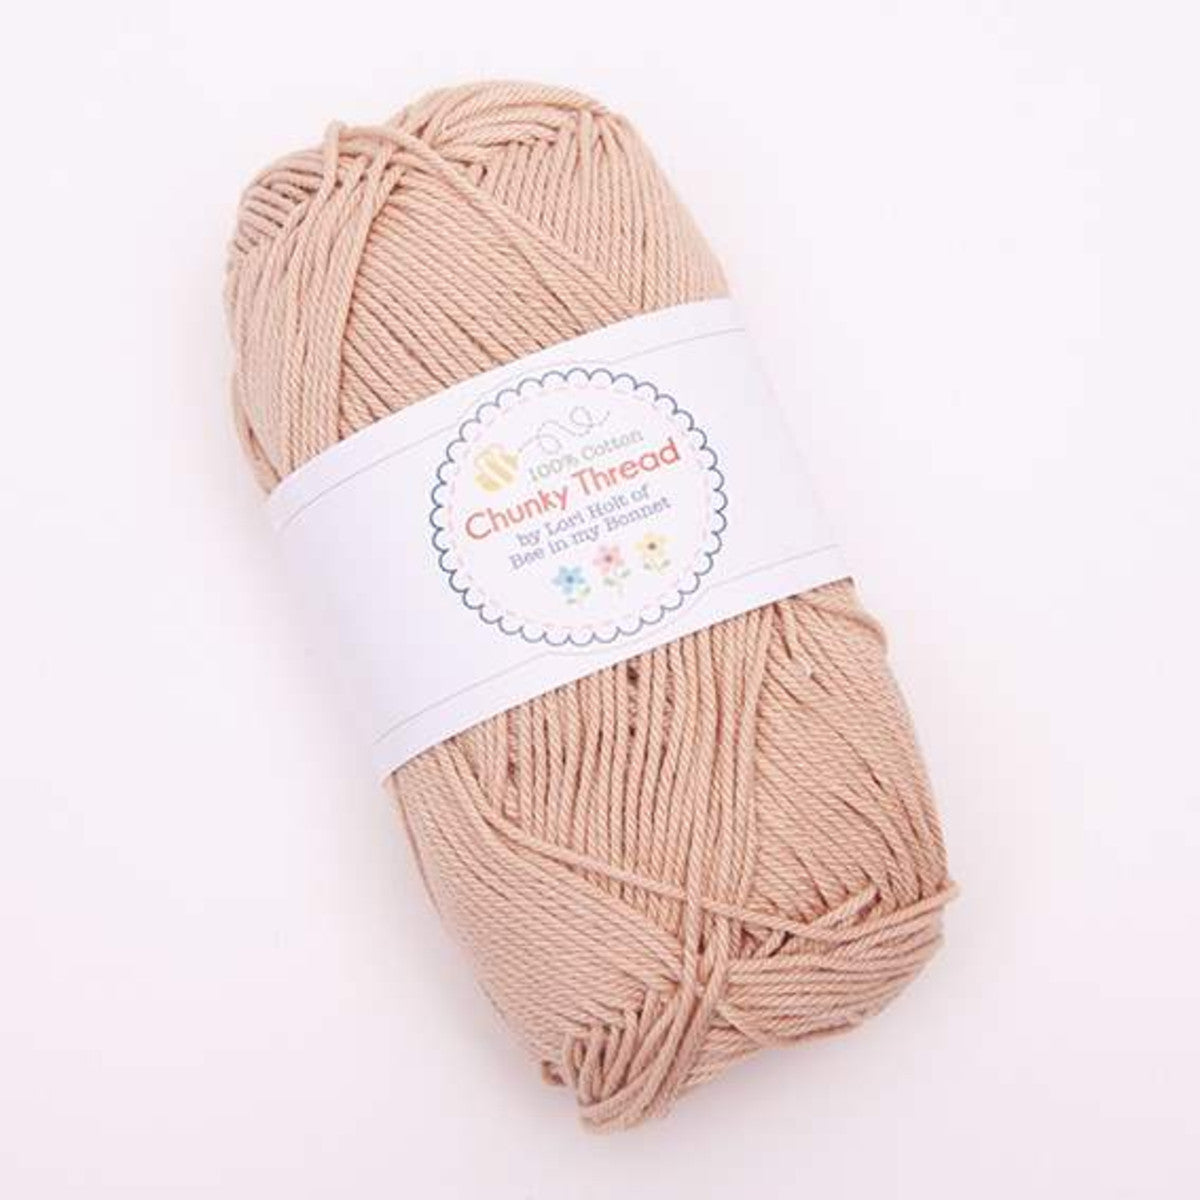 Wheat Chunky Crochet Thread by Lori Holt (50g) | Riley Blake Designs